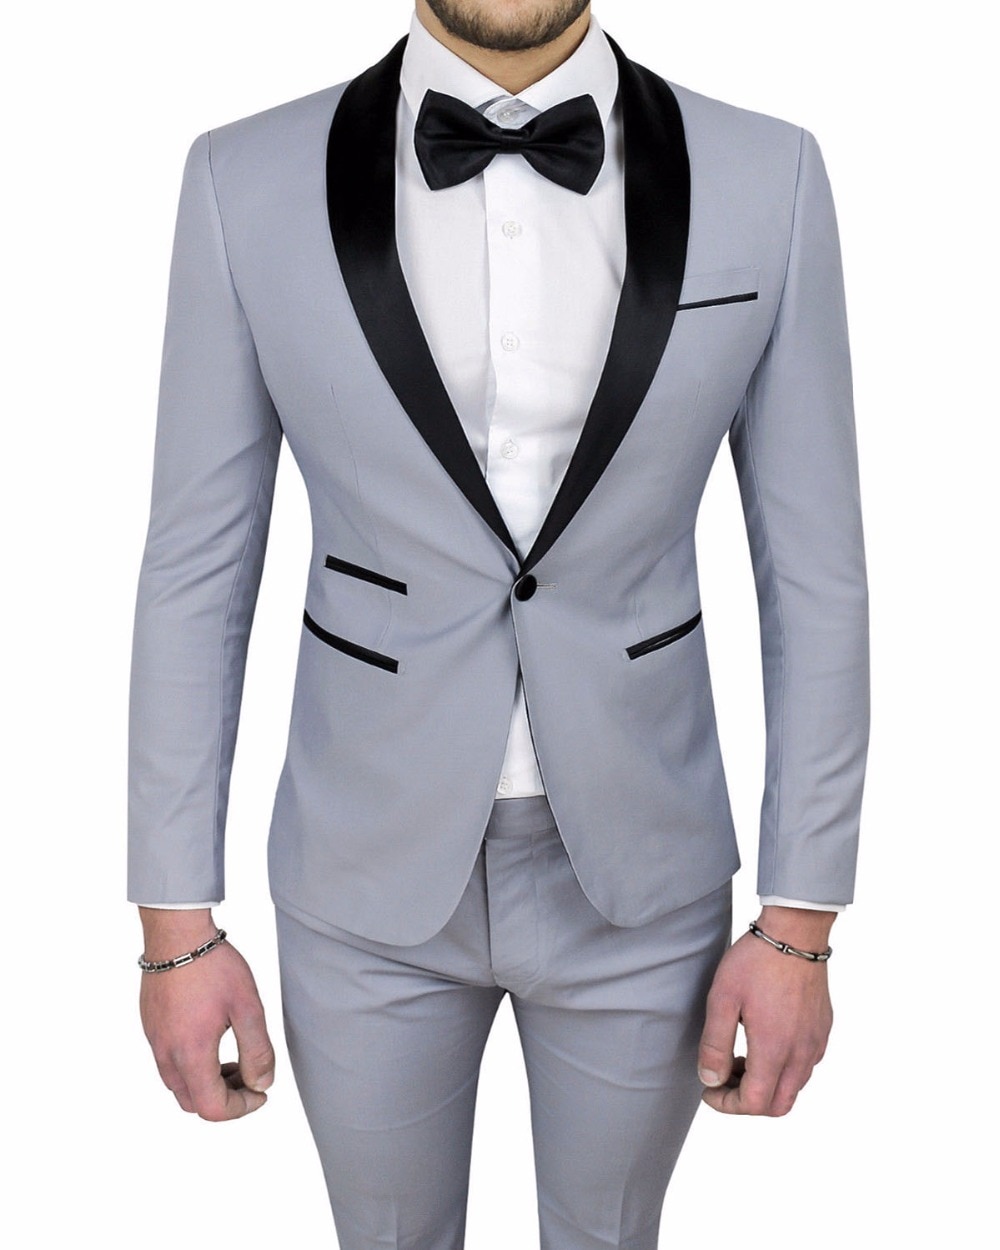 Light Gray Best Man Suit Custom Made One Button Groomsman Wedding Suits Men Groom Tuxedos Suits Jacket+Pants+Tie